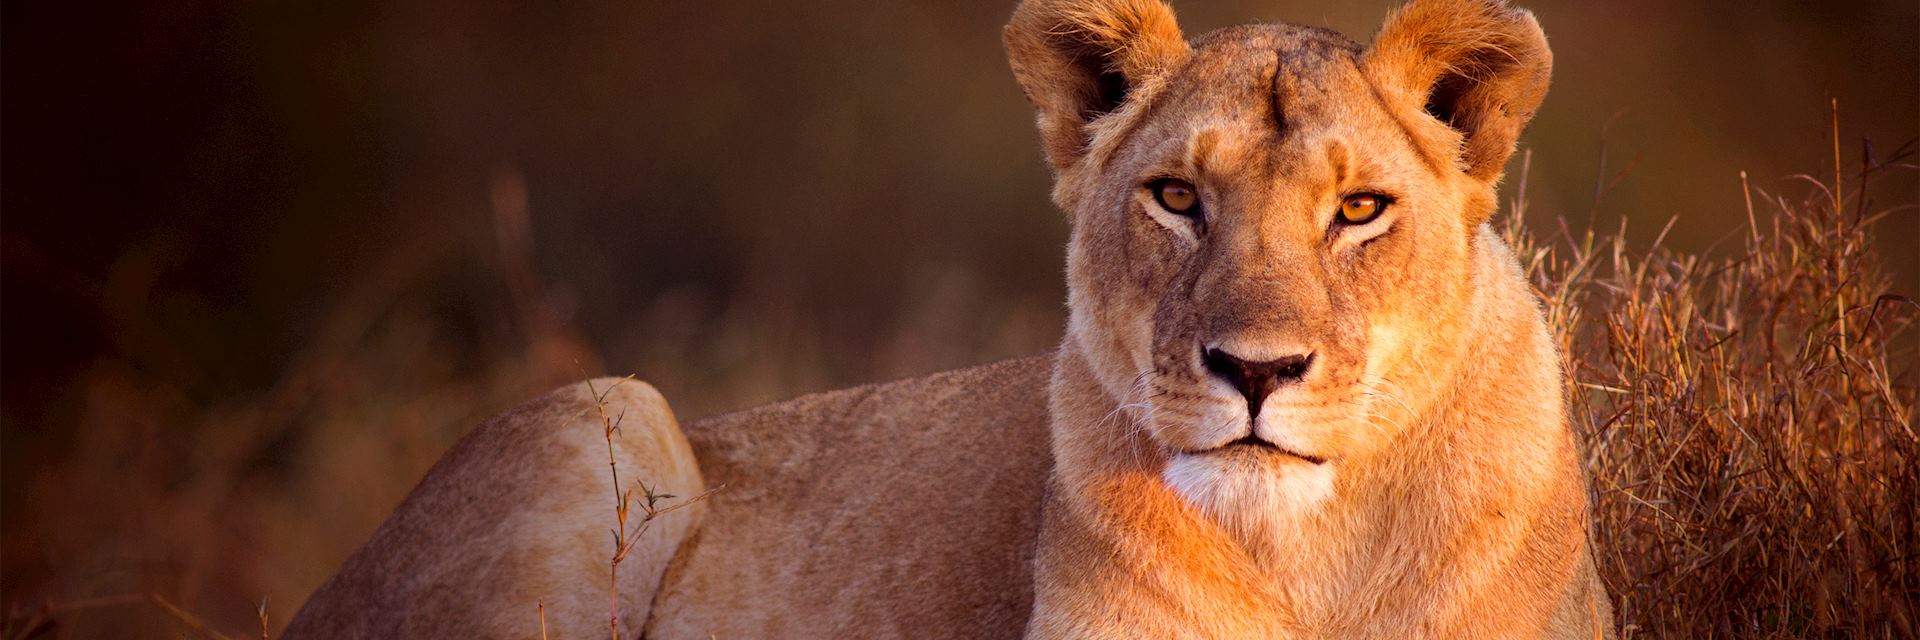 Lioness in the Masai Mara, Kenya